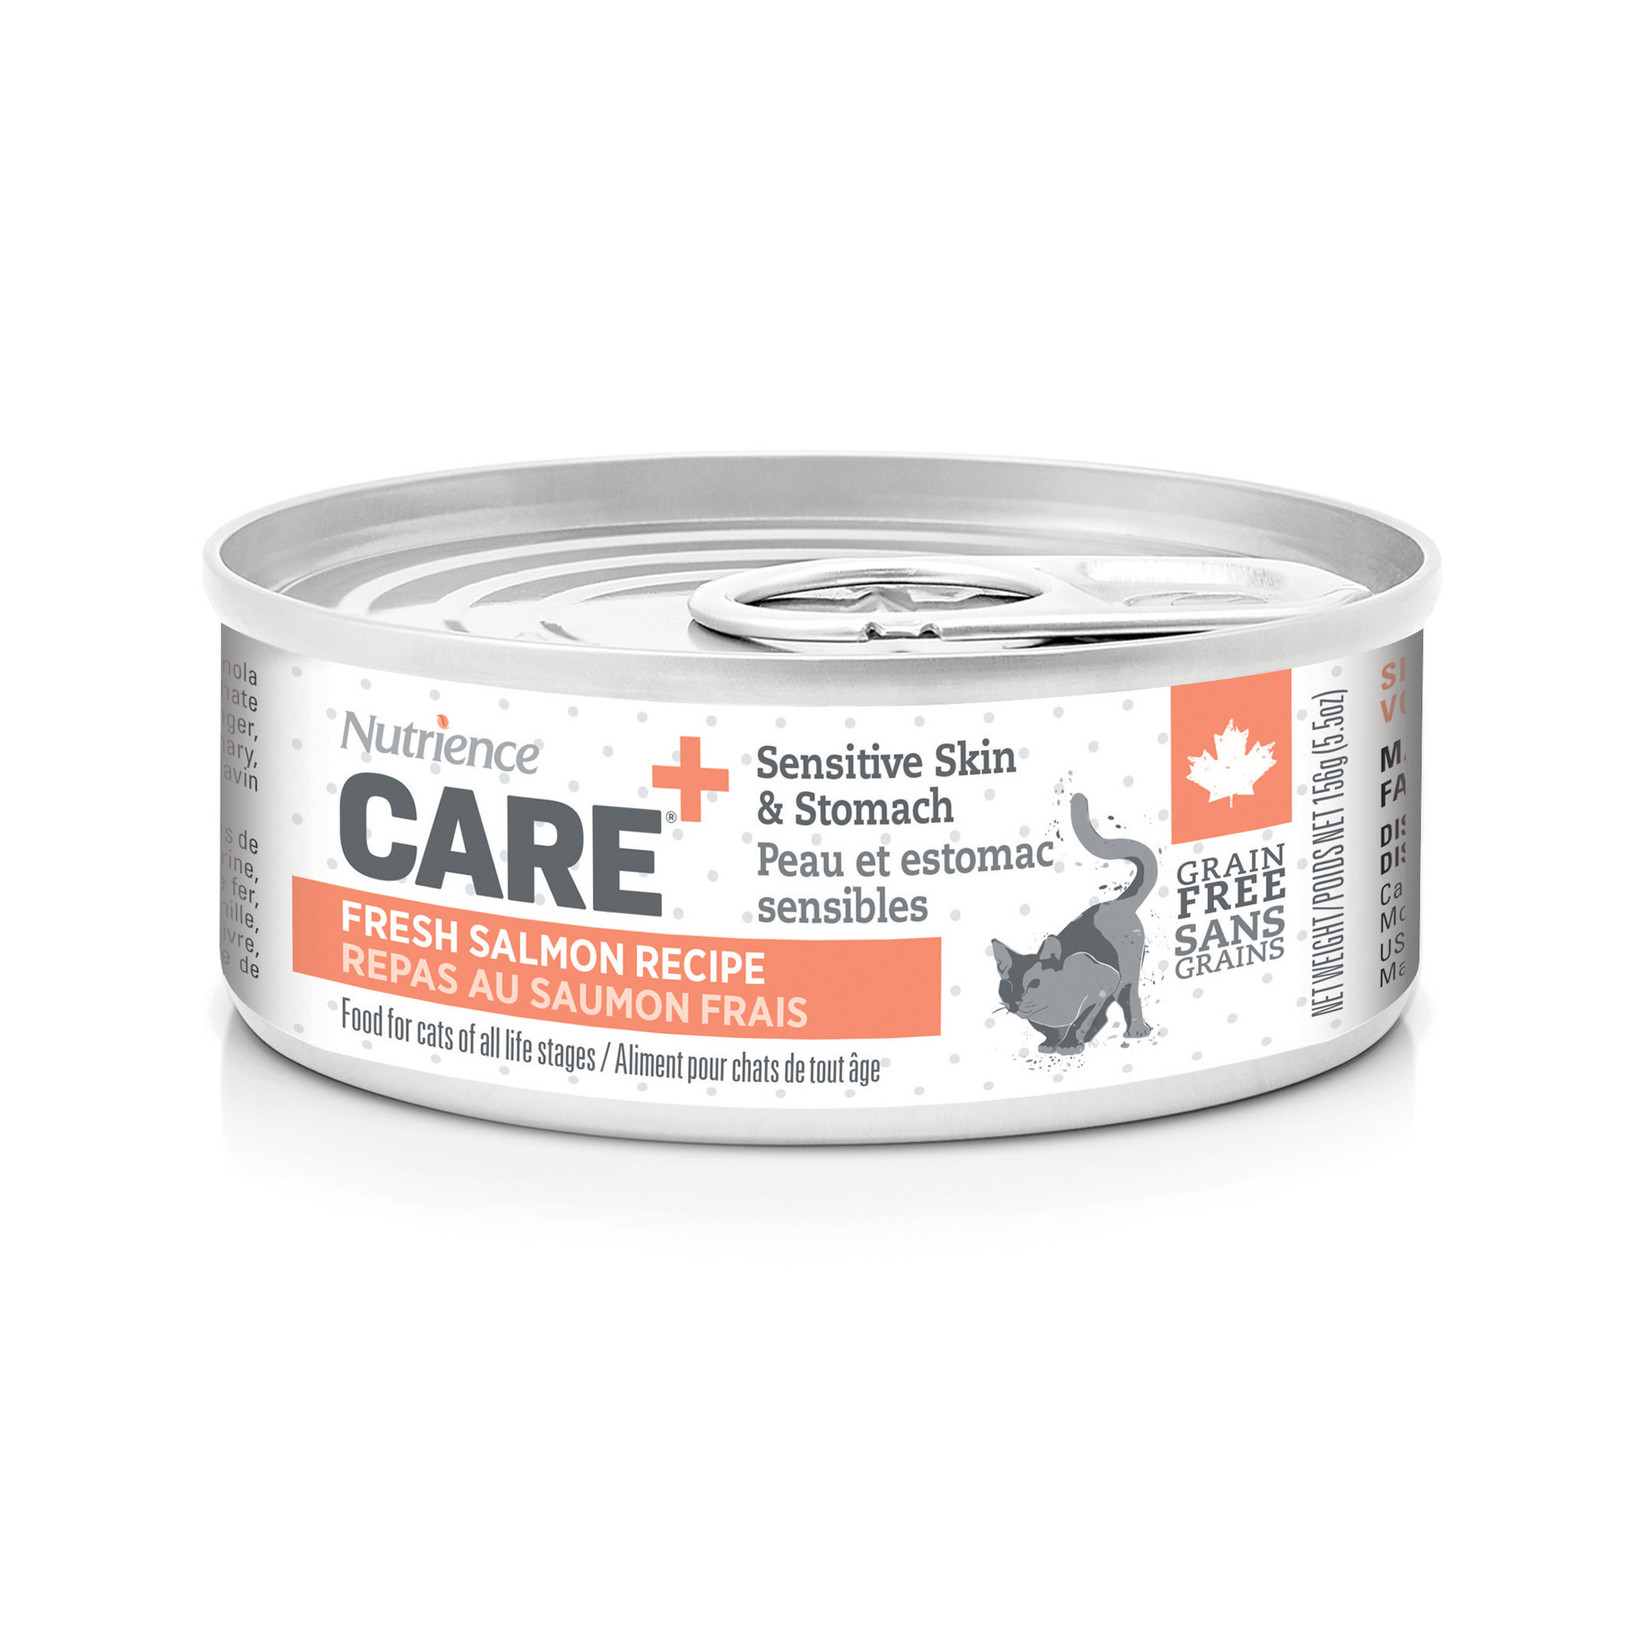 Nutrience Care - Sensitive Skin- Cat Food 156g